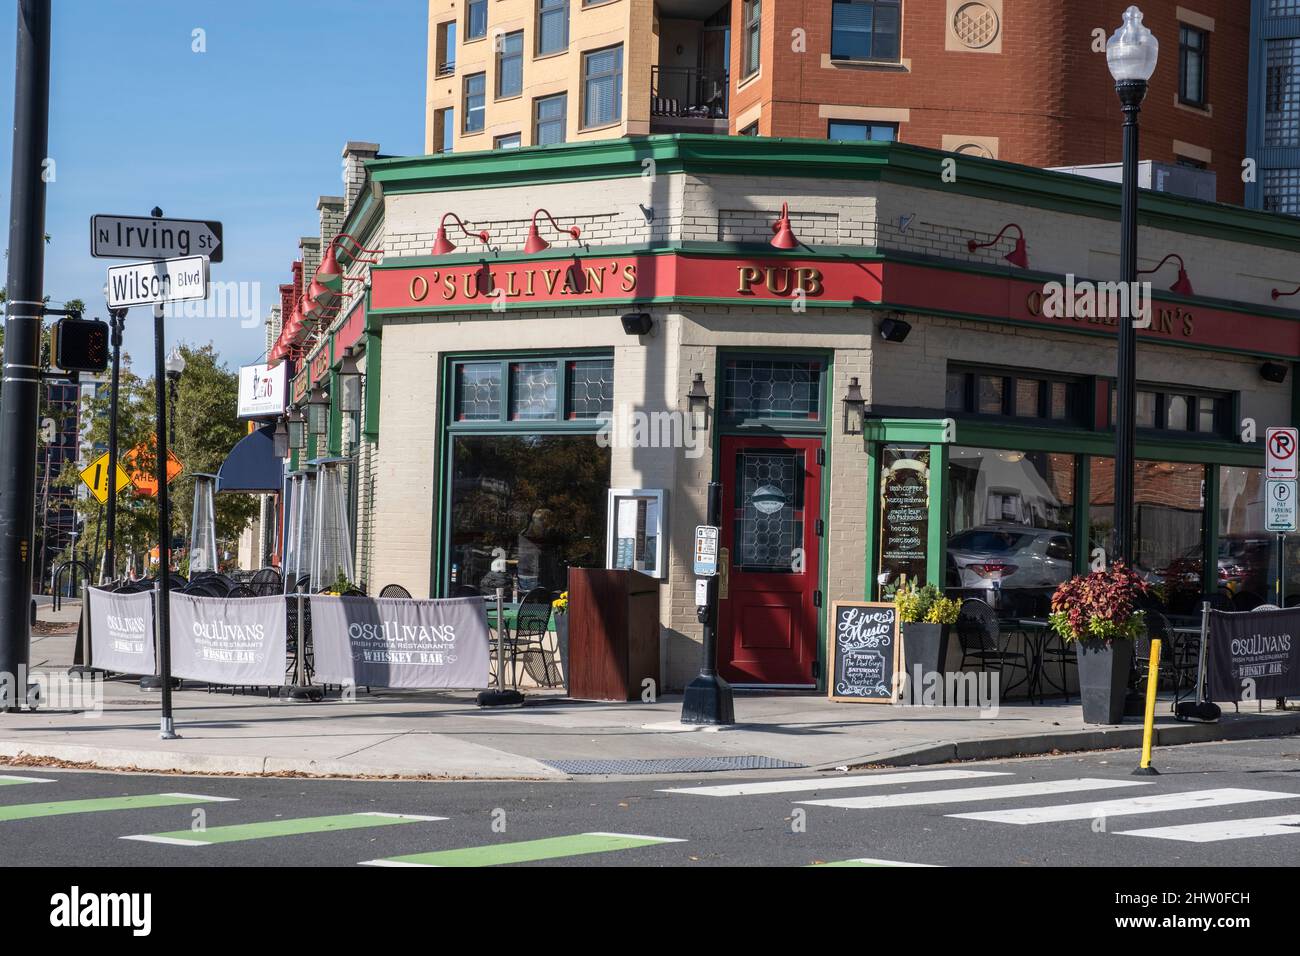 Etnico Diversityin Arlington, Virginia: Un pub irlandese. Foto Stock